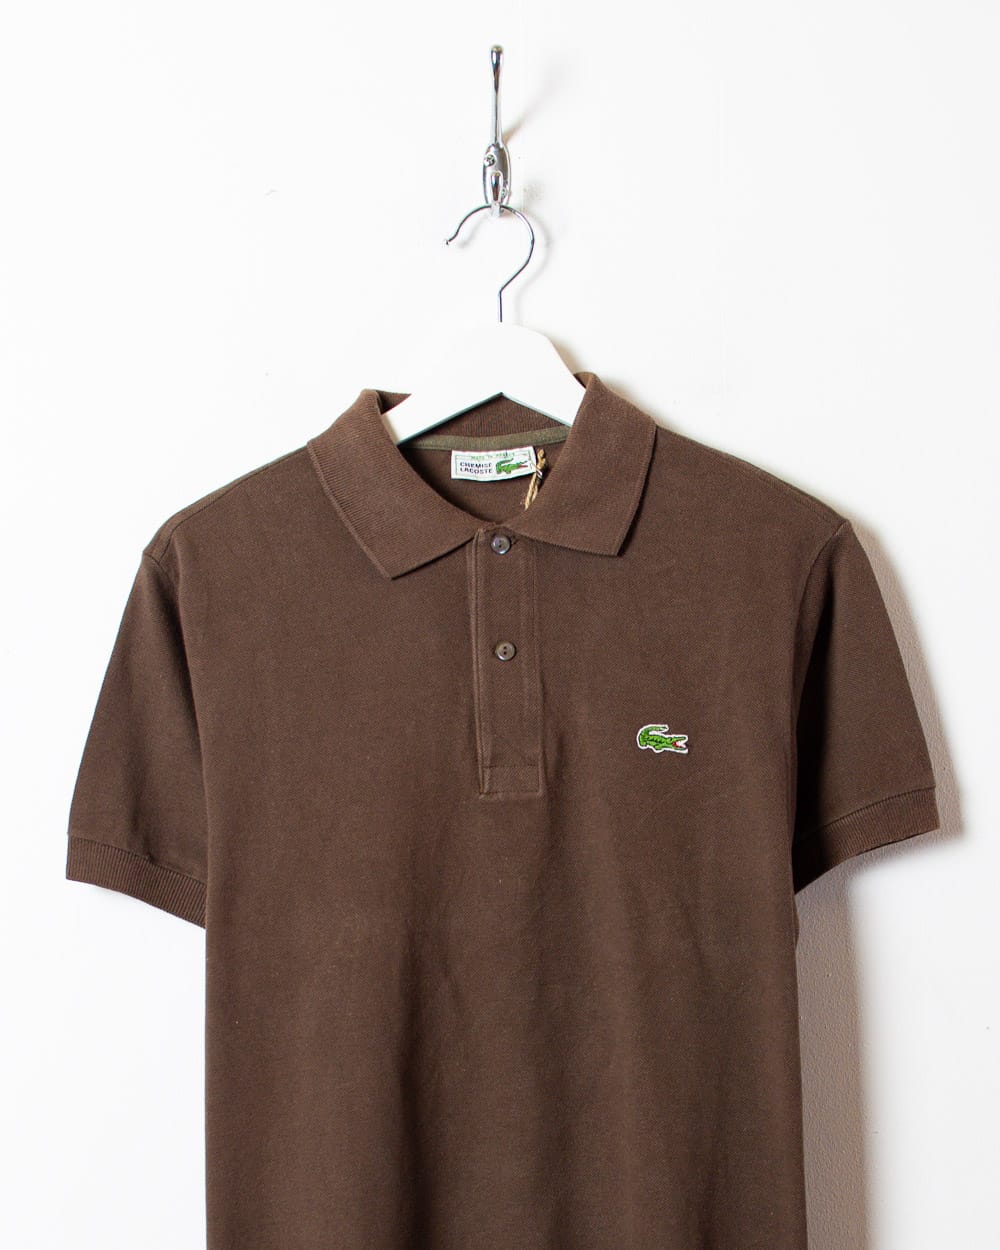 Brown Chemise Lacoste Polo Shirt - Medium